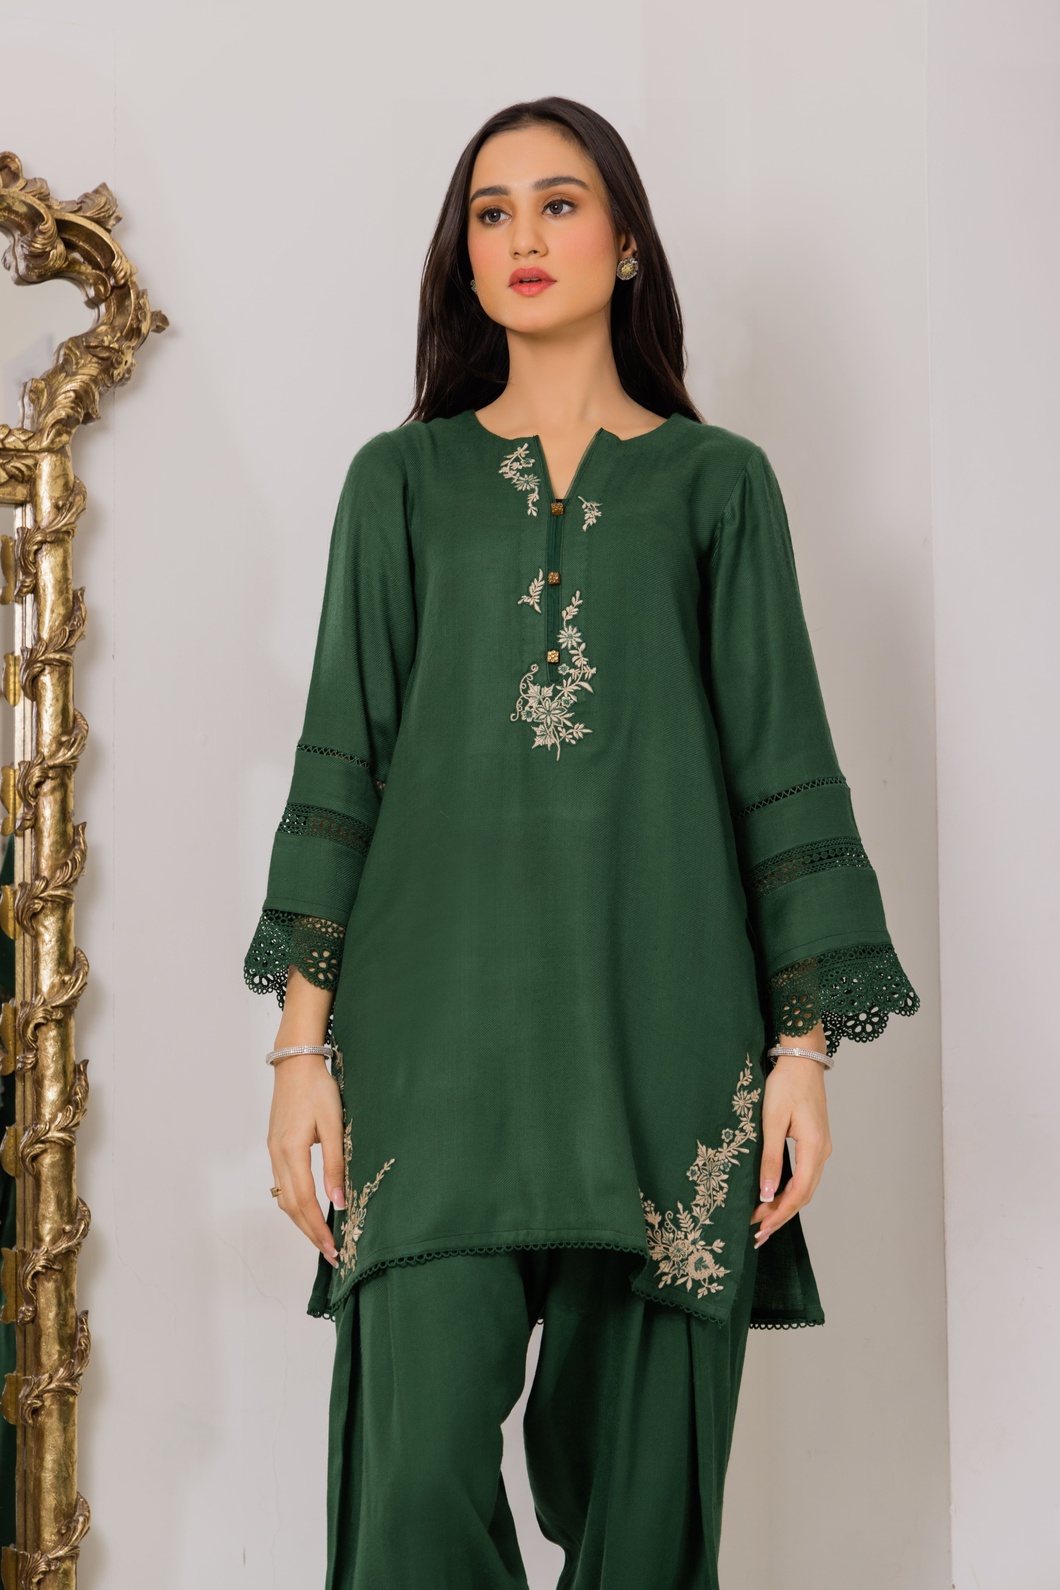 shop Green shawl shirt online